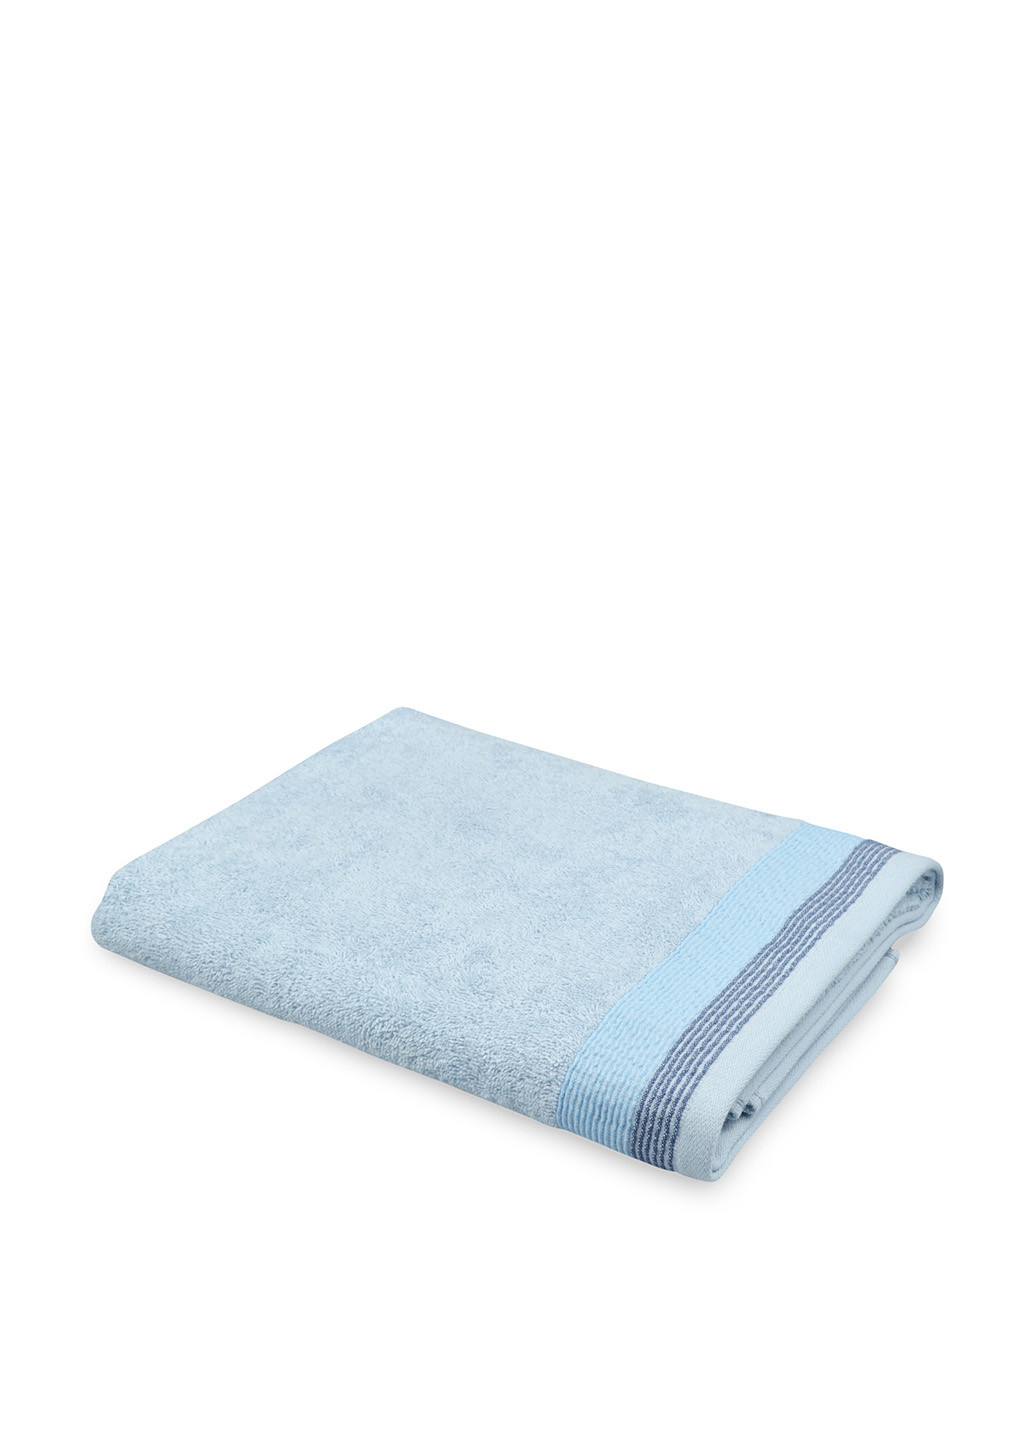 Home Line полотенце, 30х45 см полоска голубой производство - Индия